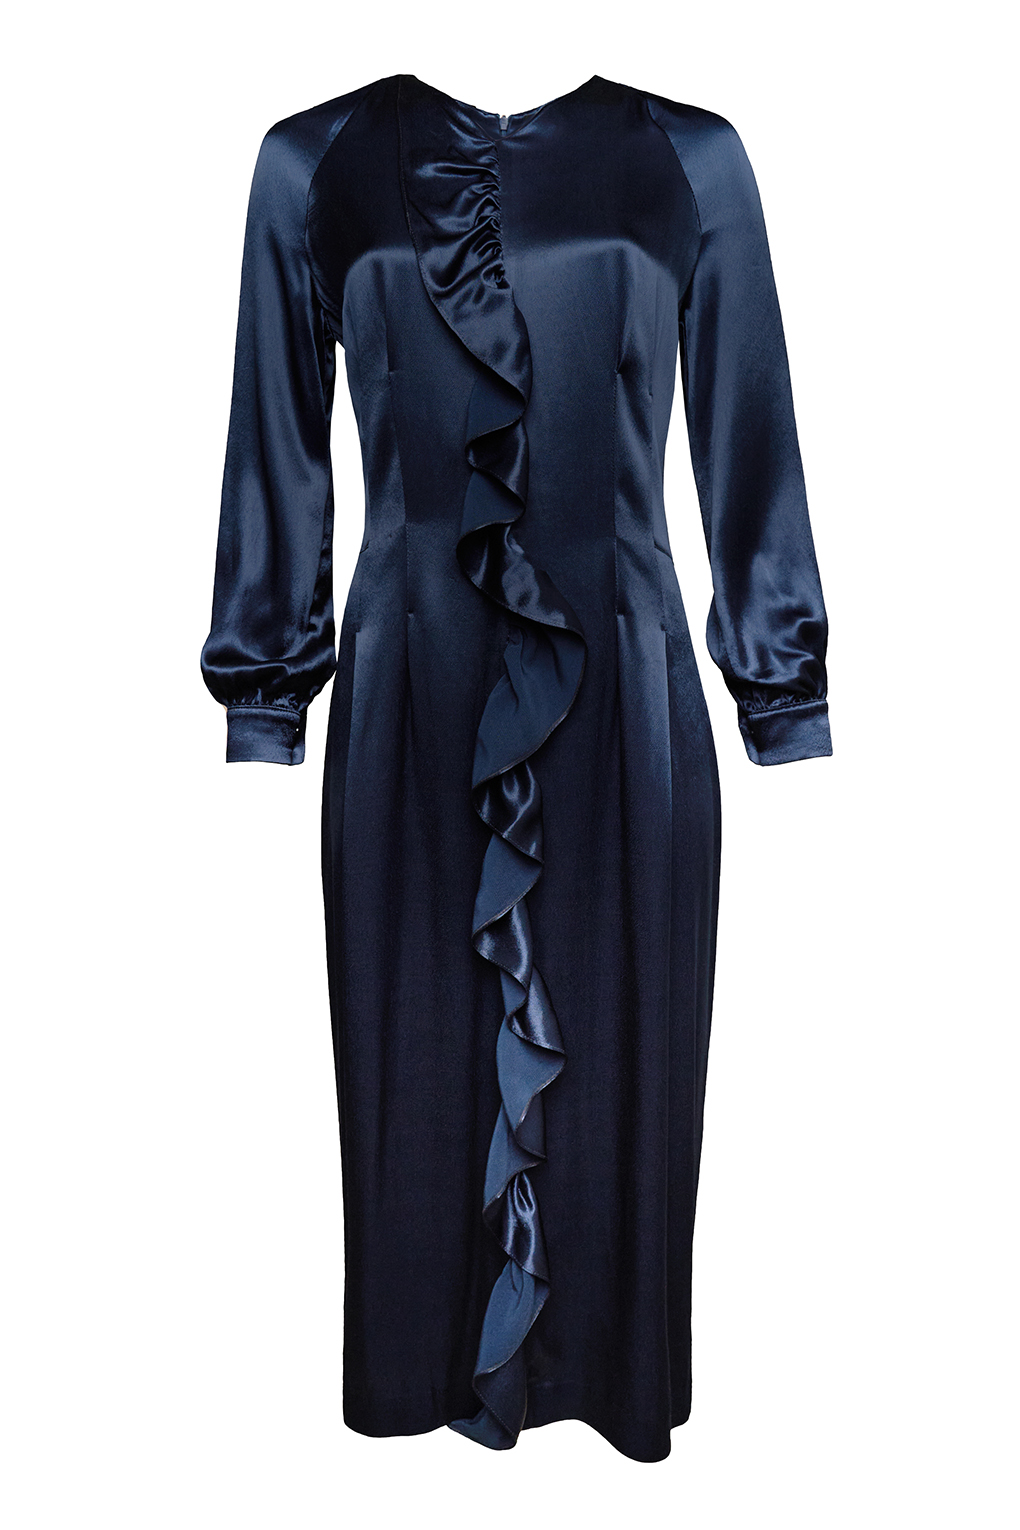 Платье женское PAOLA RAY PR120-3068 синее M